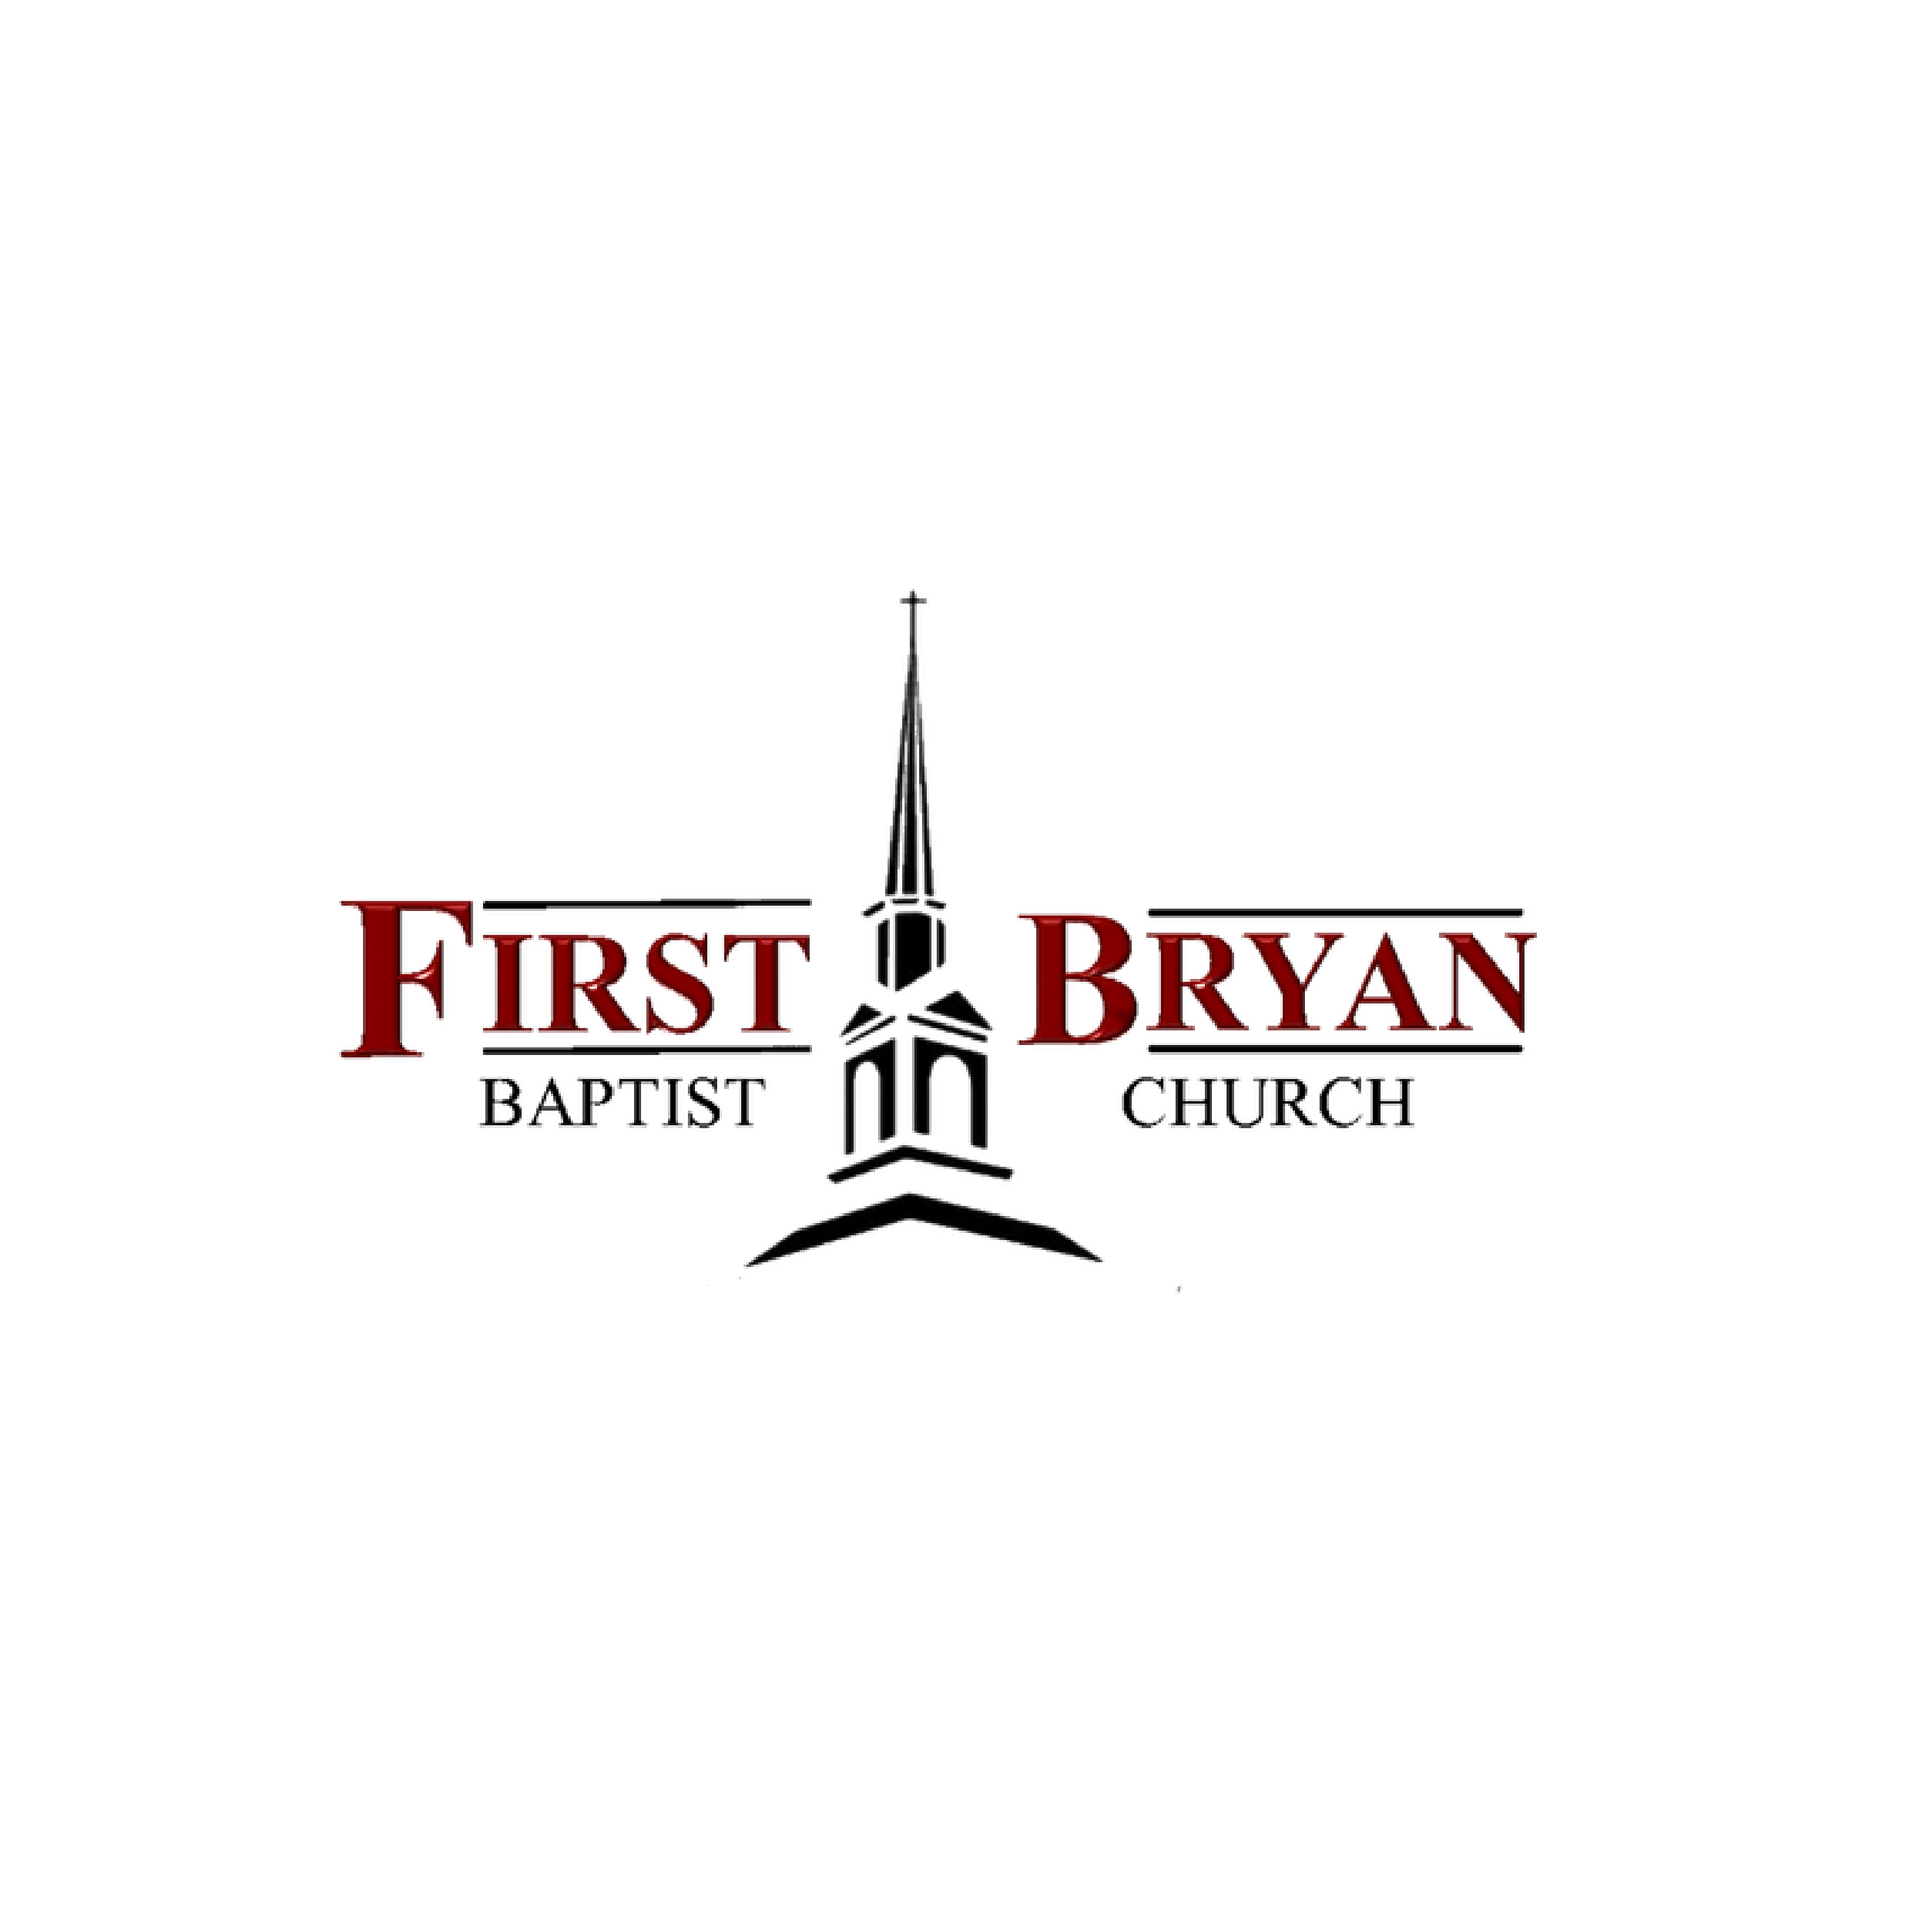 Vengeance – First Baptist Church Bryan